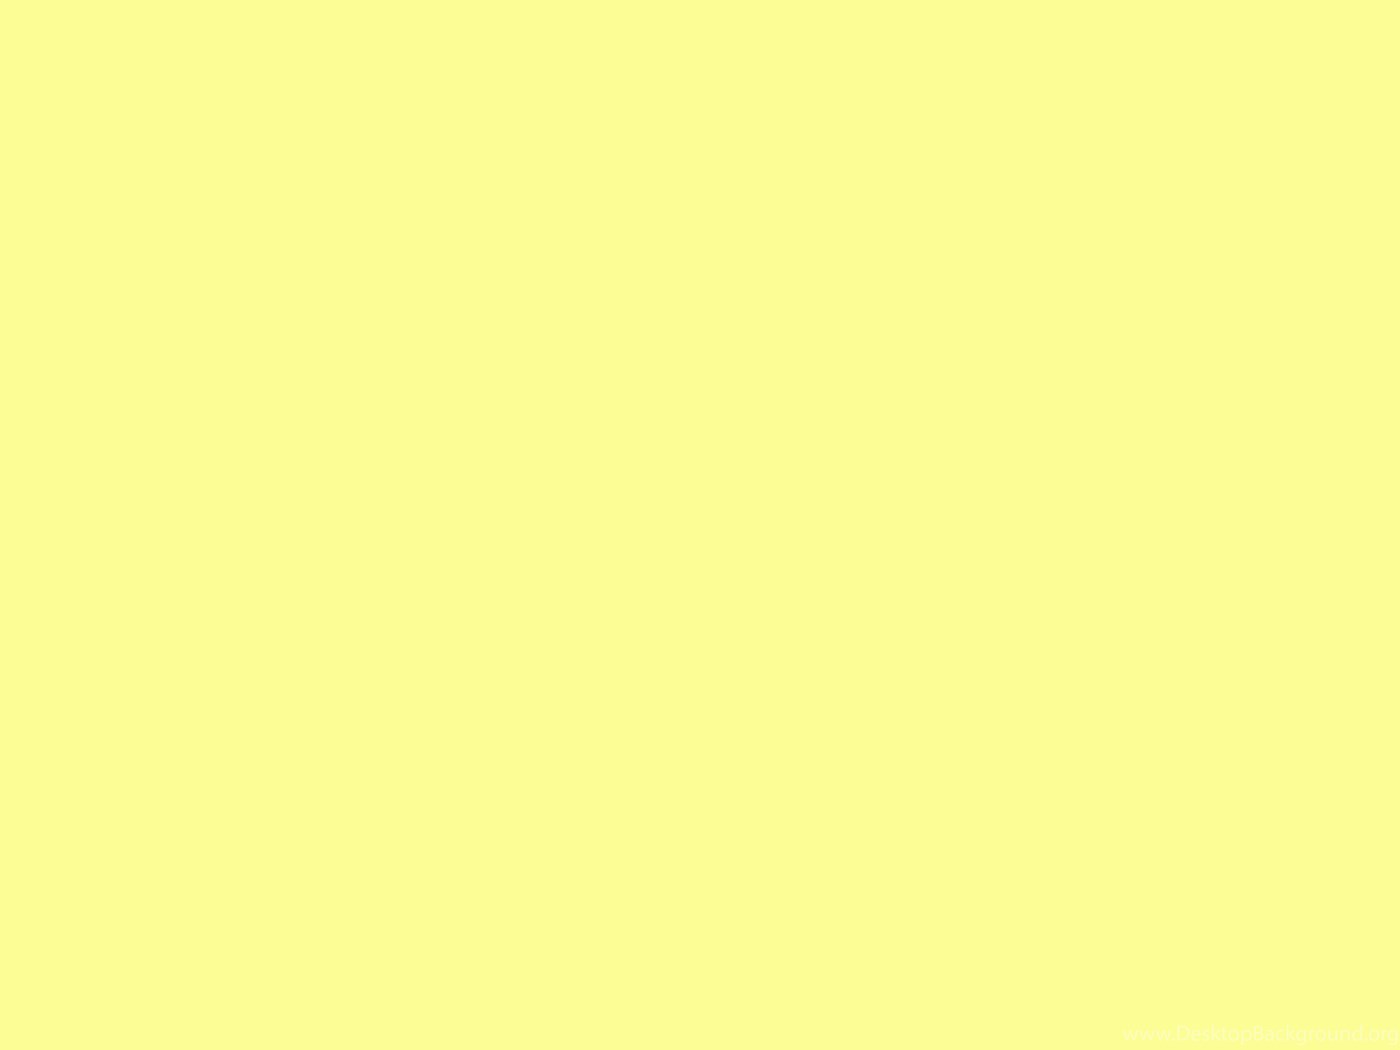 papel pintado amarillo pastel,verde,amarillo,naranja,marrón,texto